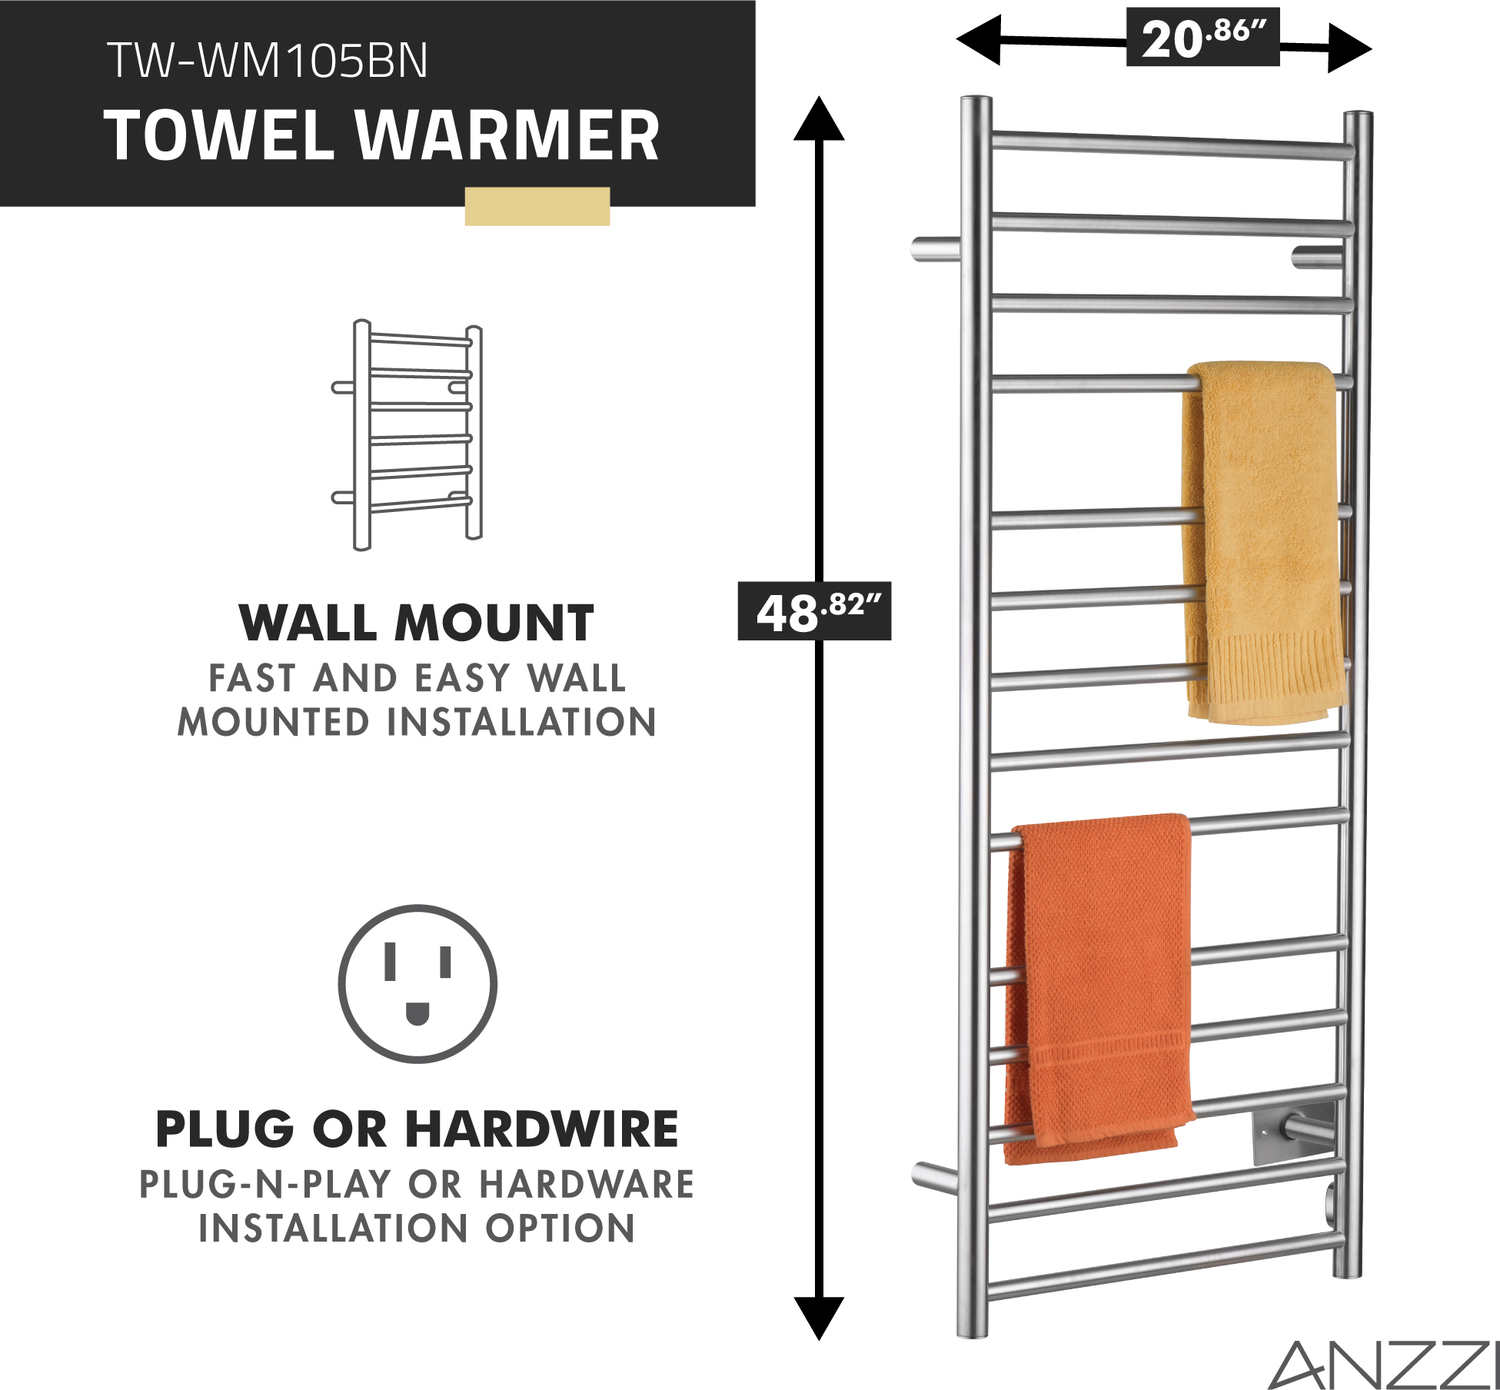 brushed steel towel holder Anzzi BATHROOM - Towel Warmers - Wall Mounted Chrome